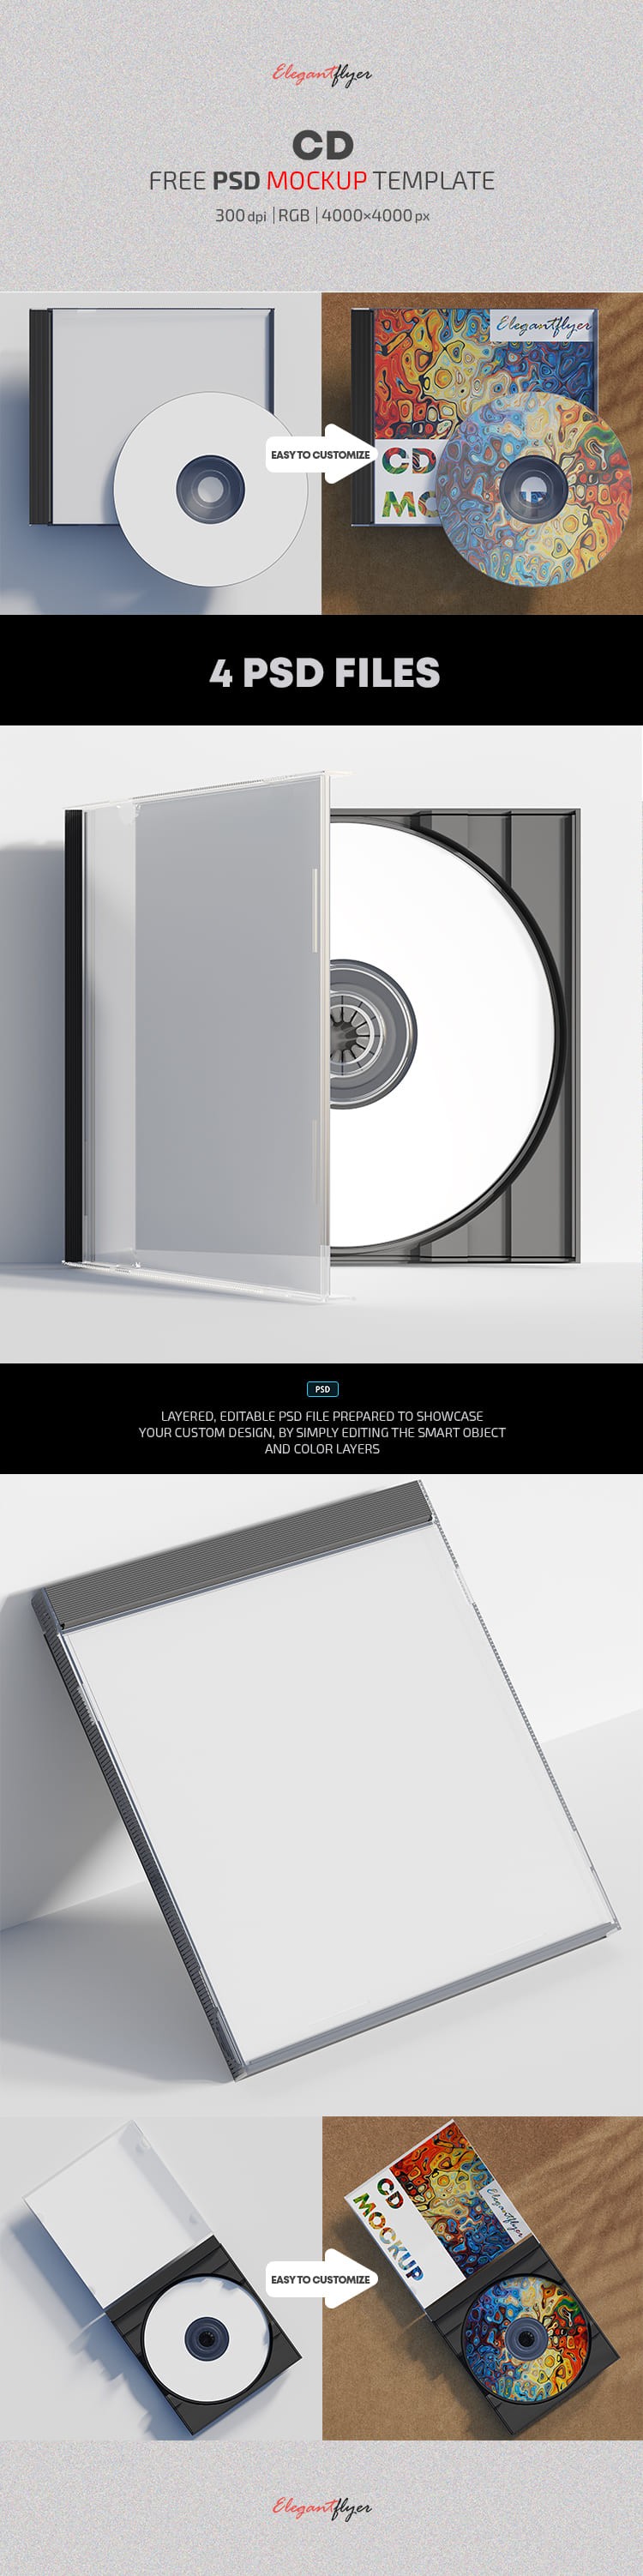 Projektowanie płyt CD by ElegantFlyer